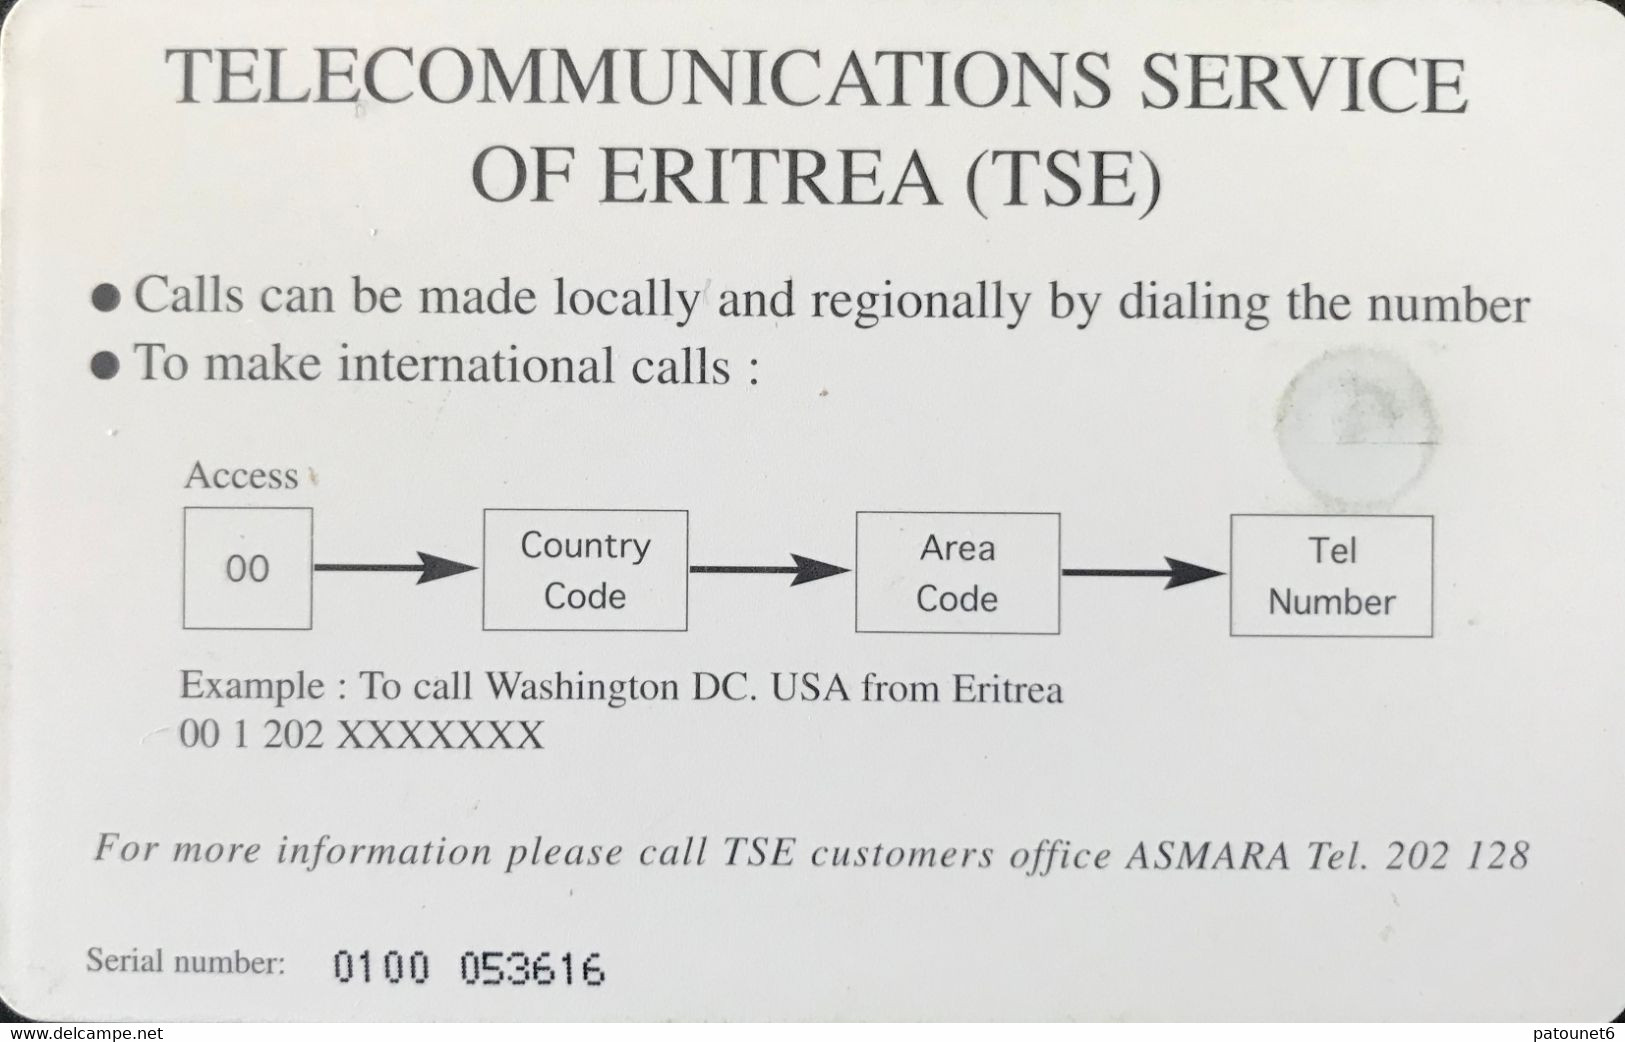 ERYTHREE  -  Phonecard  -  TSE   -  Three Seasons In Two Hours   -   Nakfa 25 - Erythrée